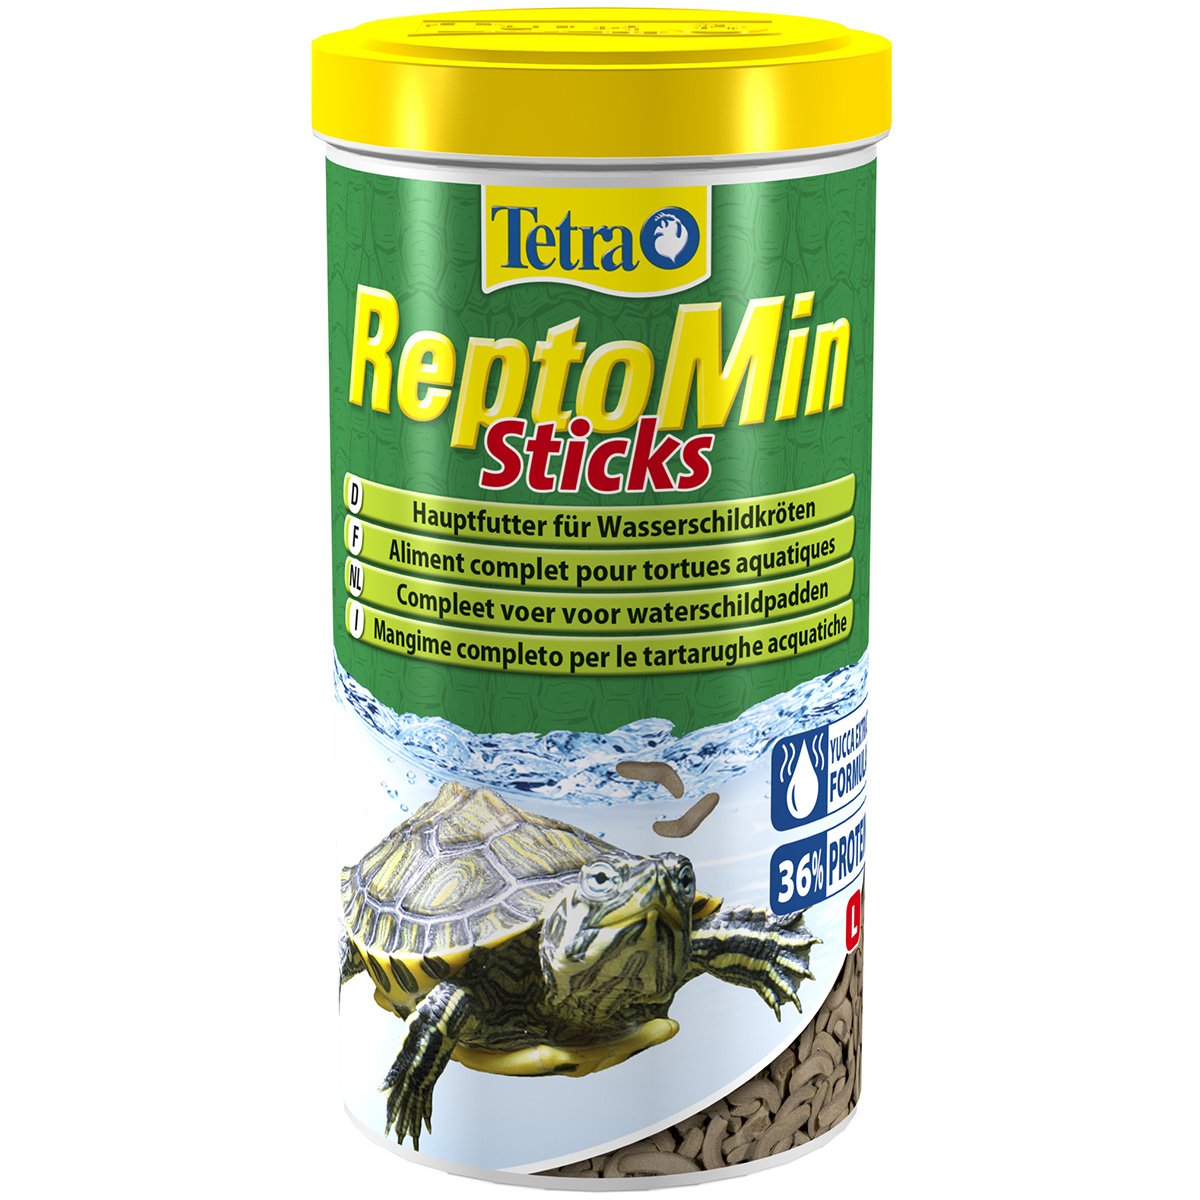 Tetra ReptoMin Schildkrötenfutter 1000ml von Tetra